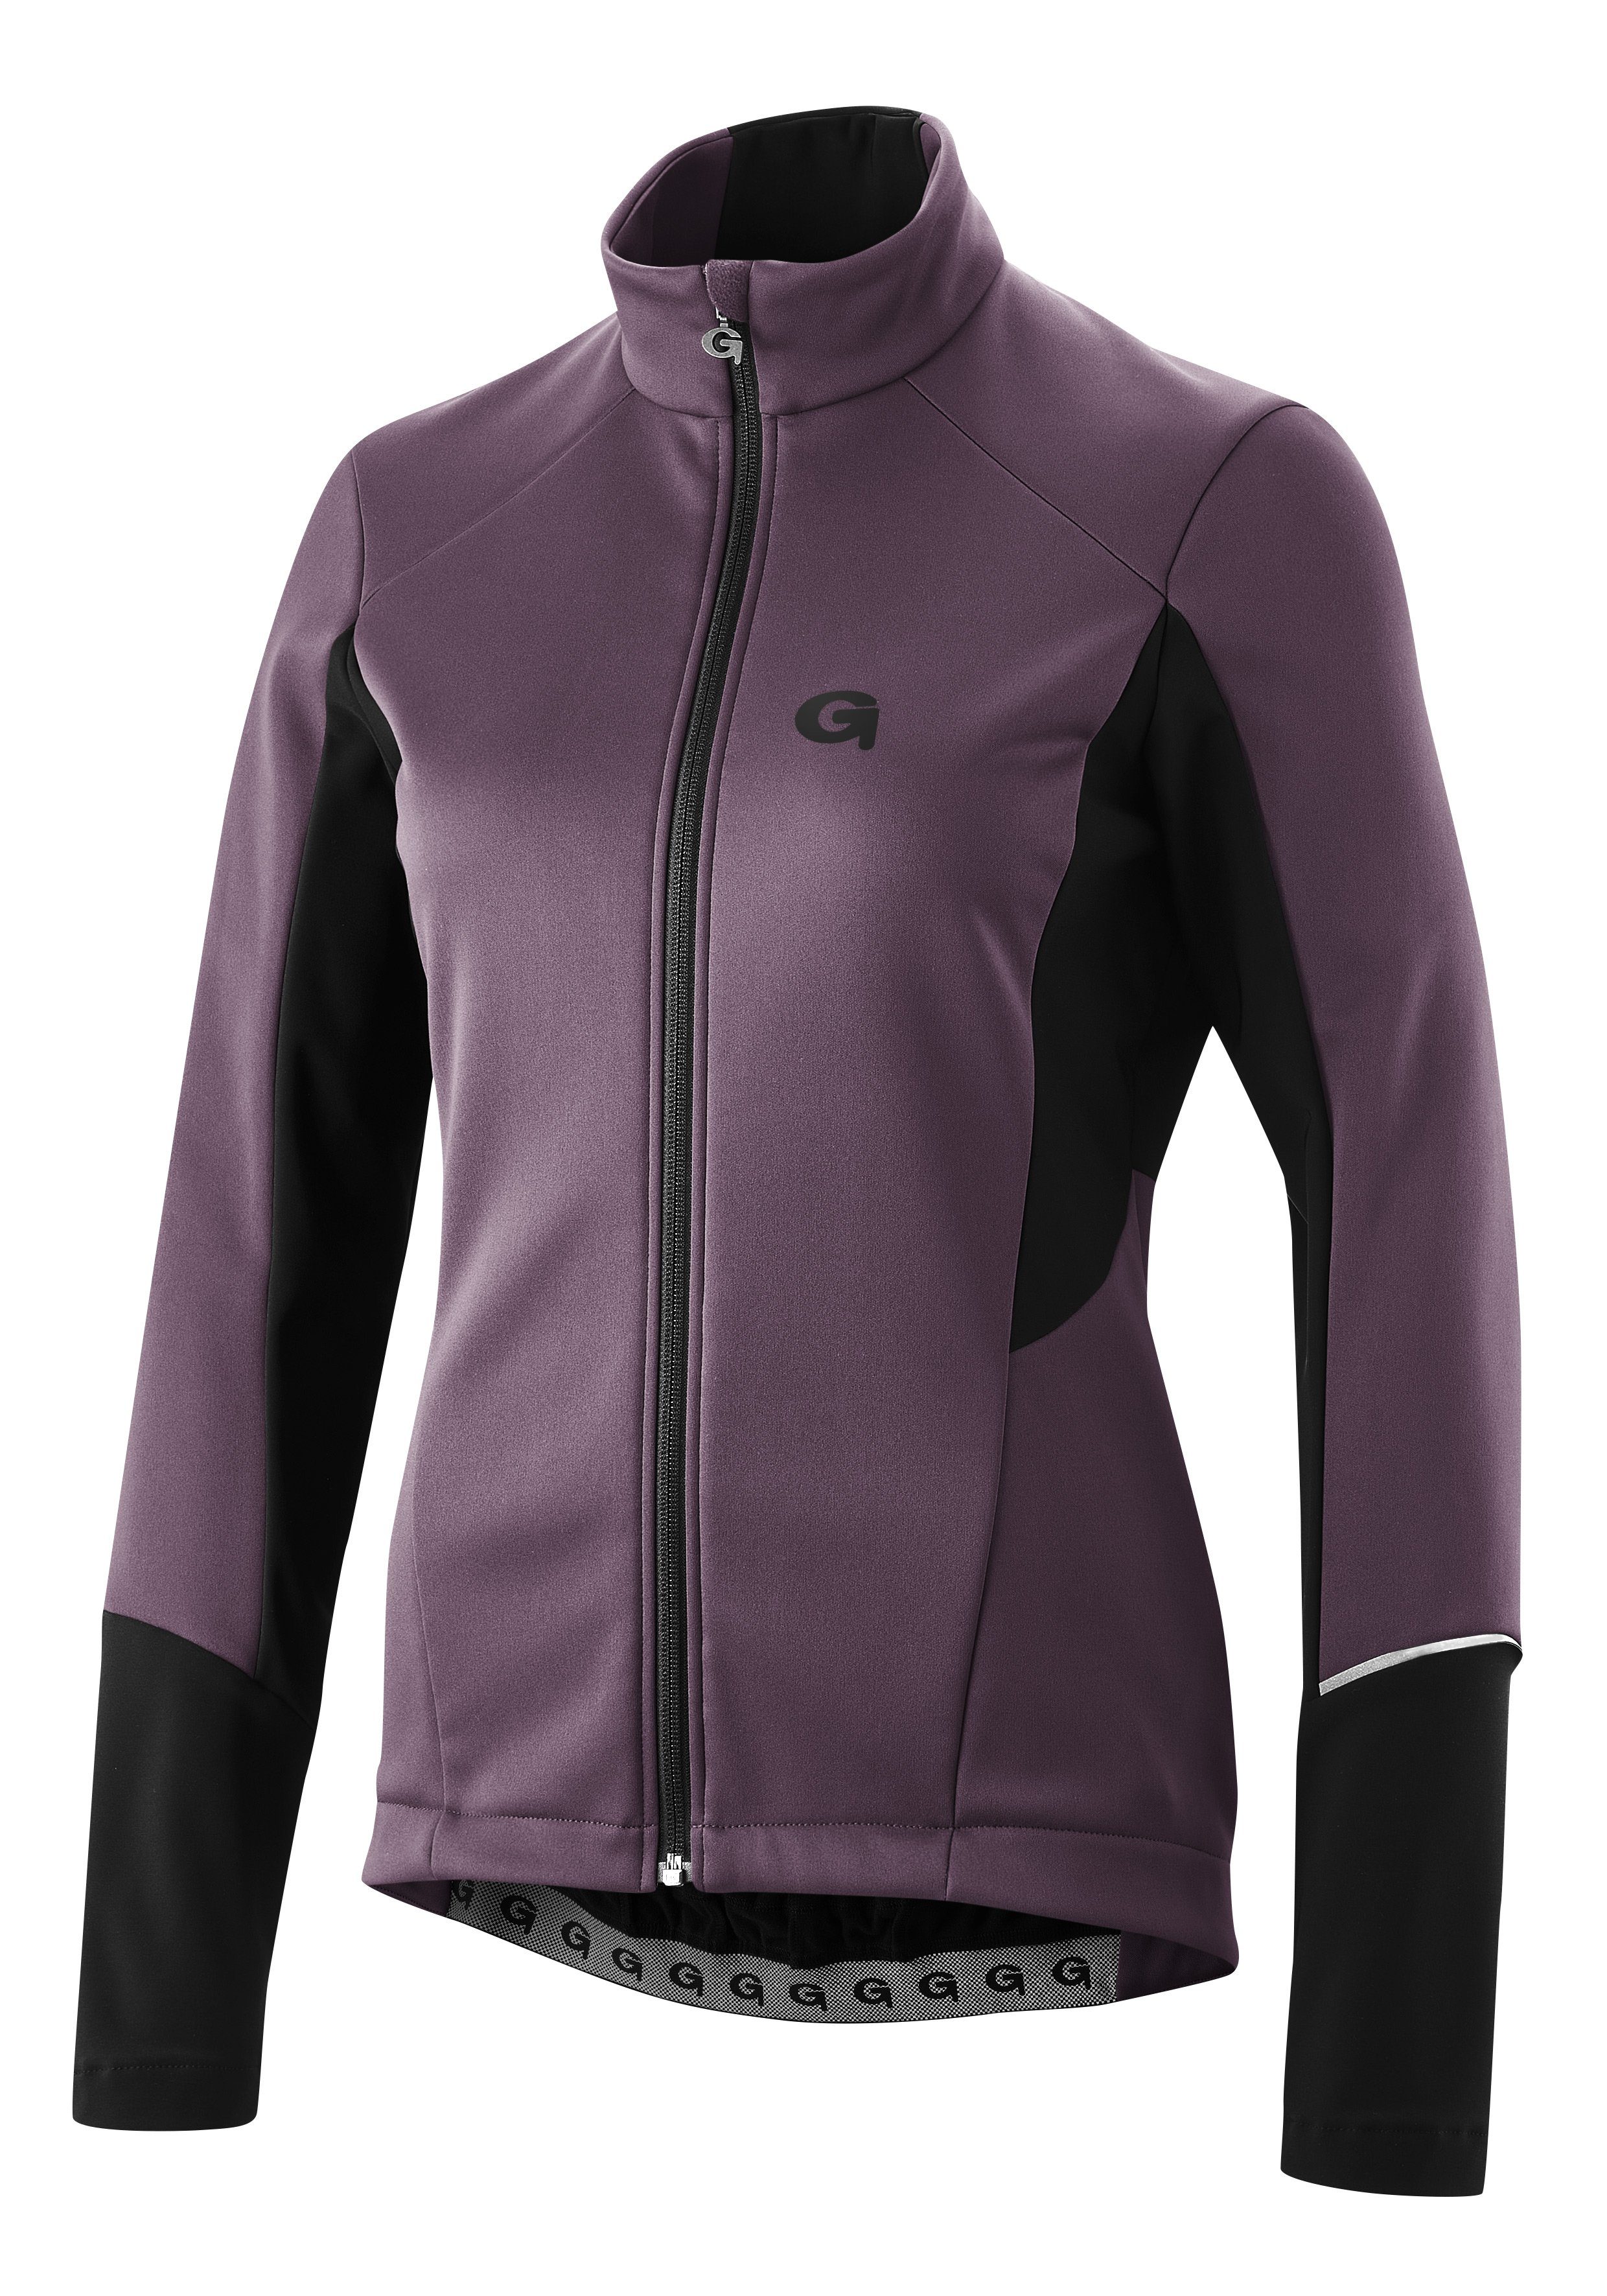 Gonso Fahrradjacke FURIANI Damen Softshell-Jacke, atmungsaktiv wasserabweisend und Windjacke aubergine